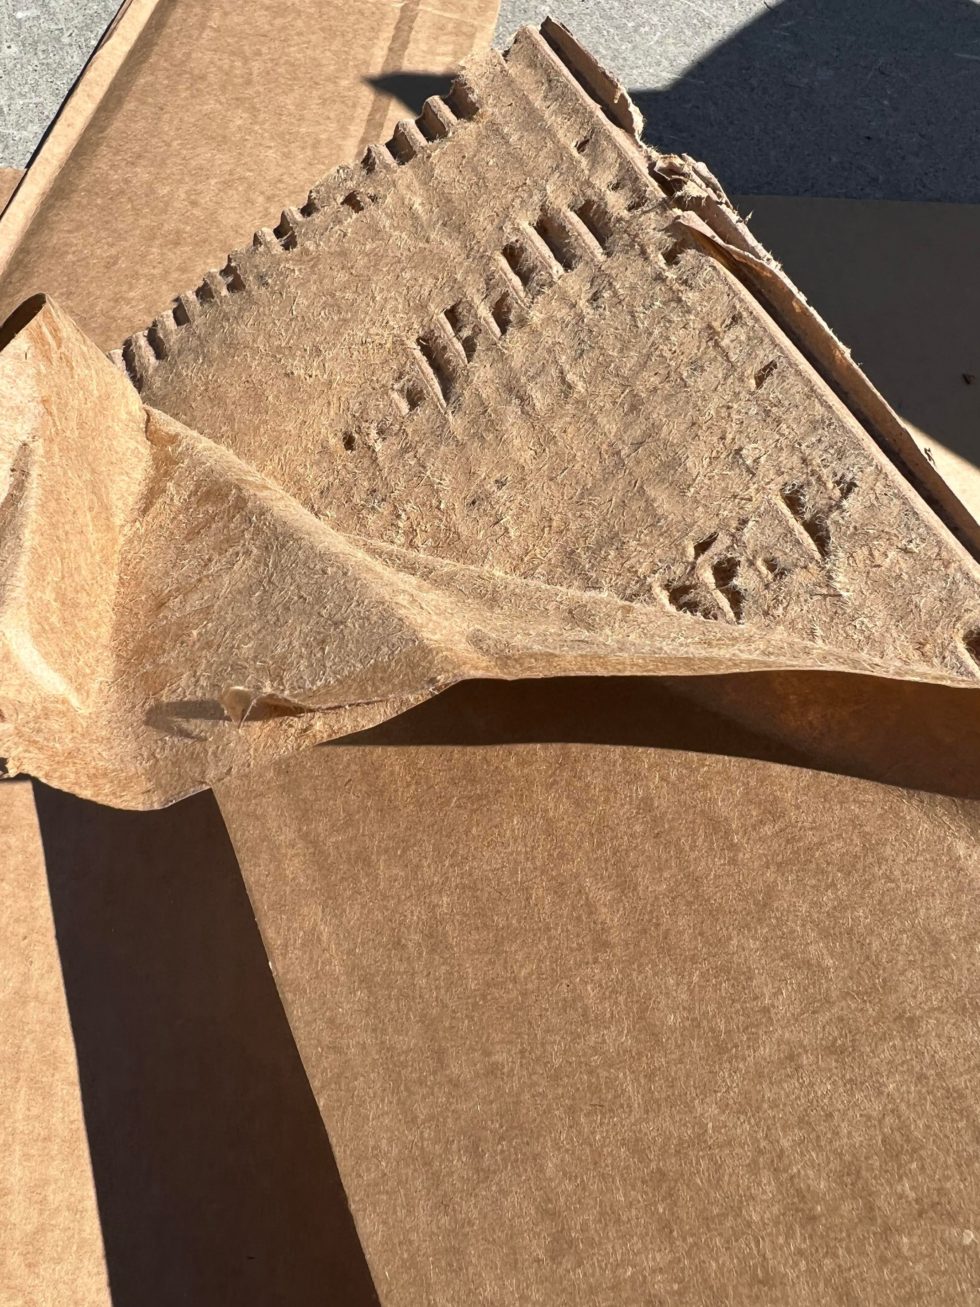 DIY Cardboard Owl - The Shabby Tree